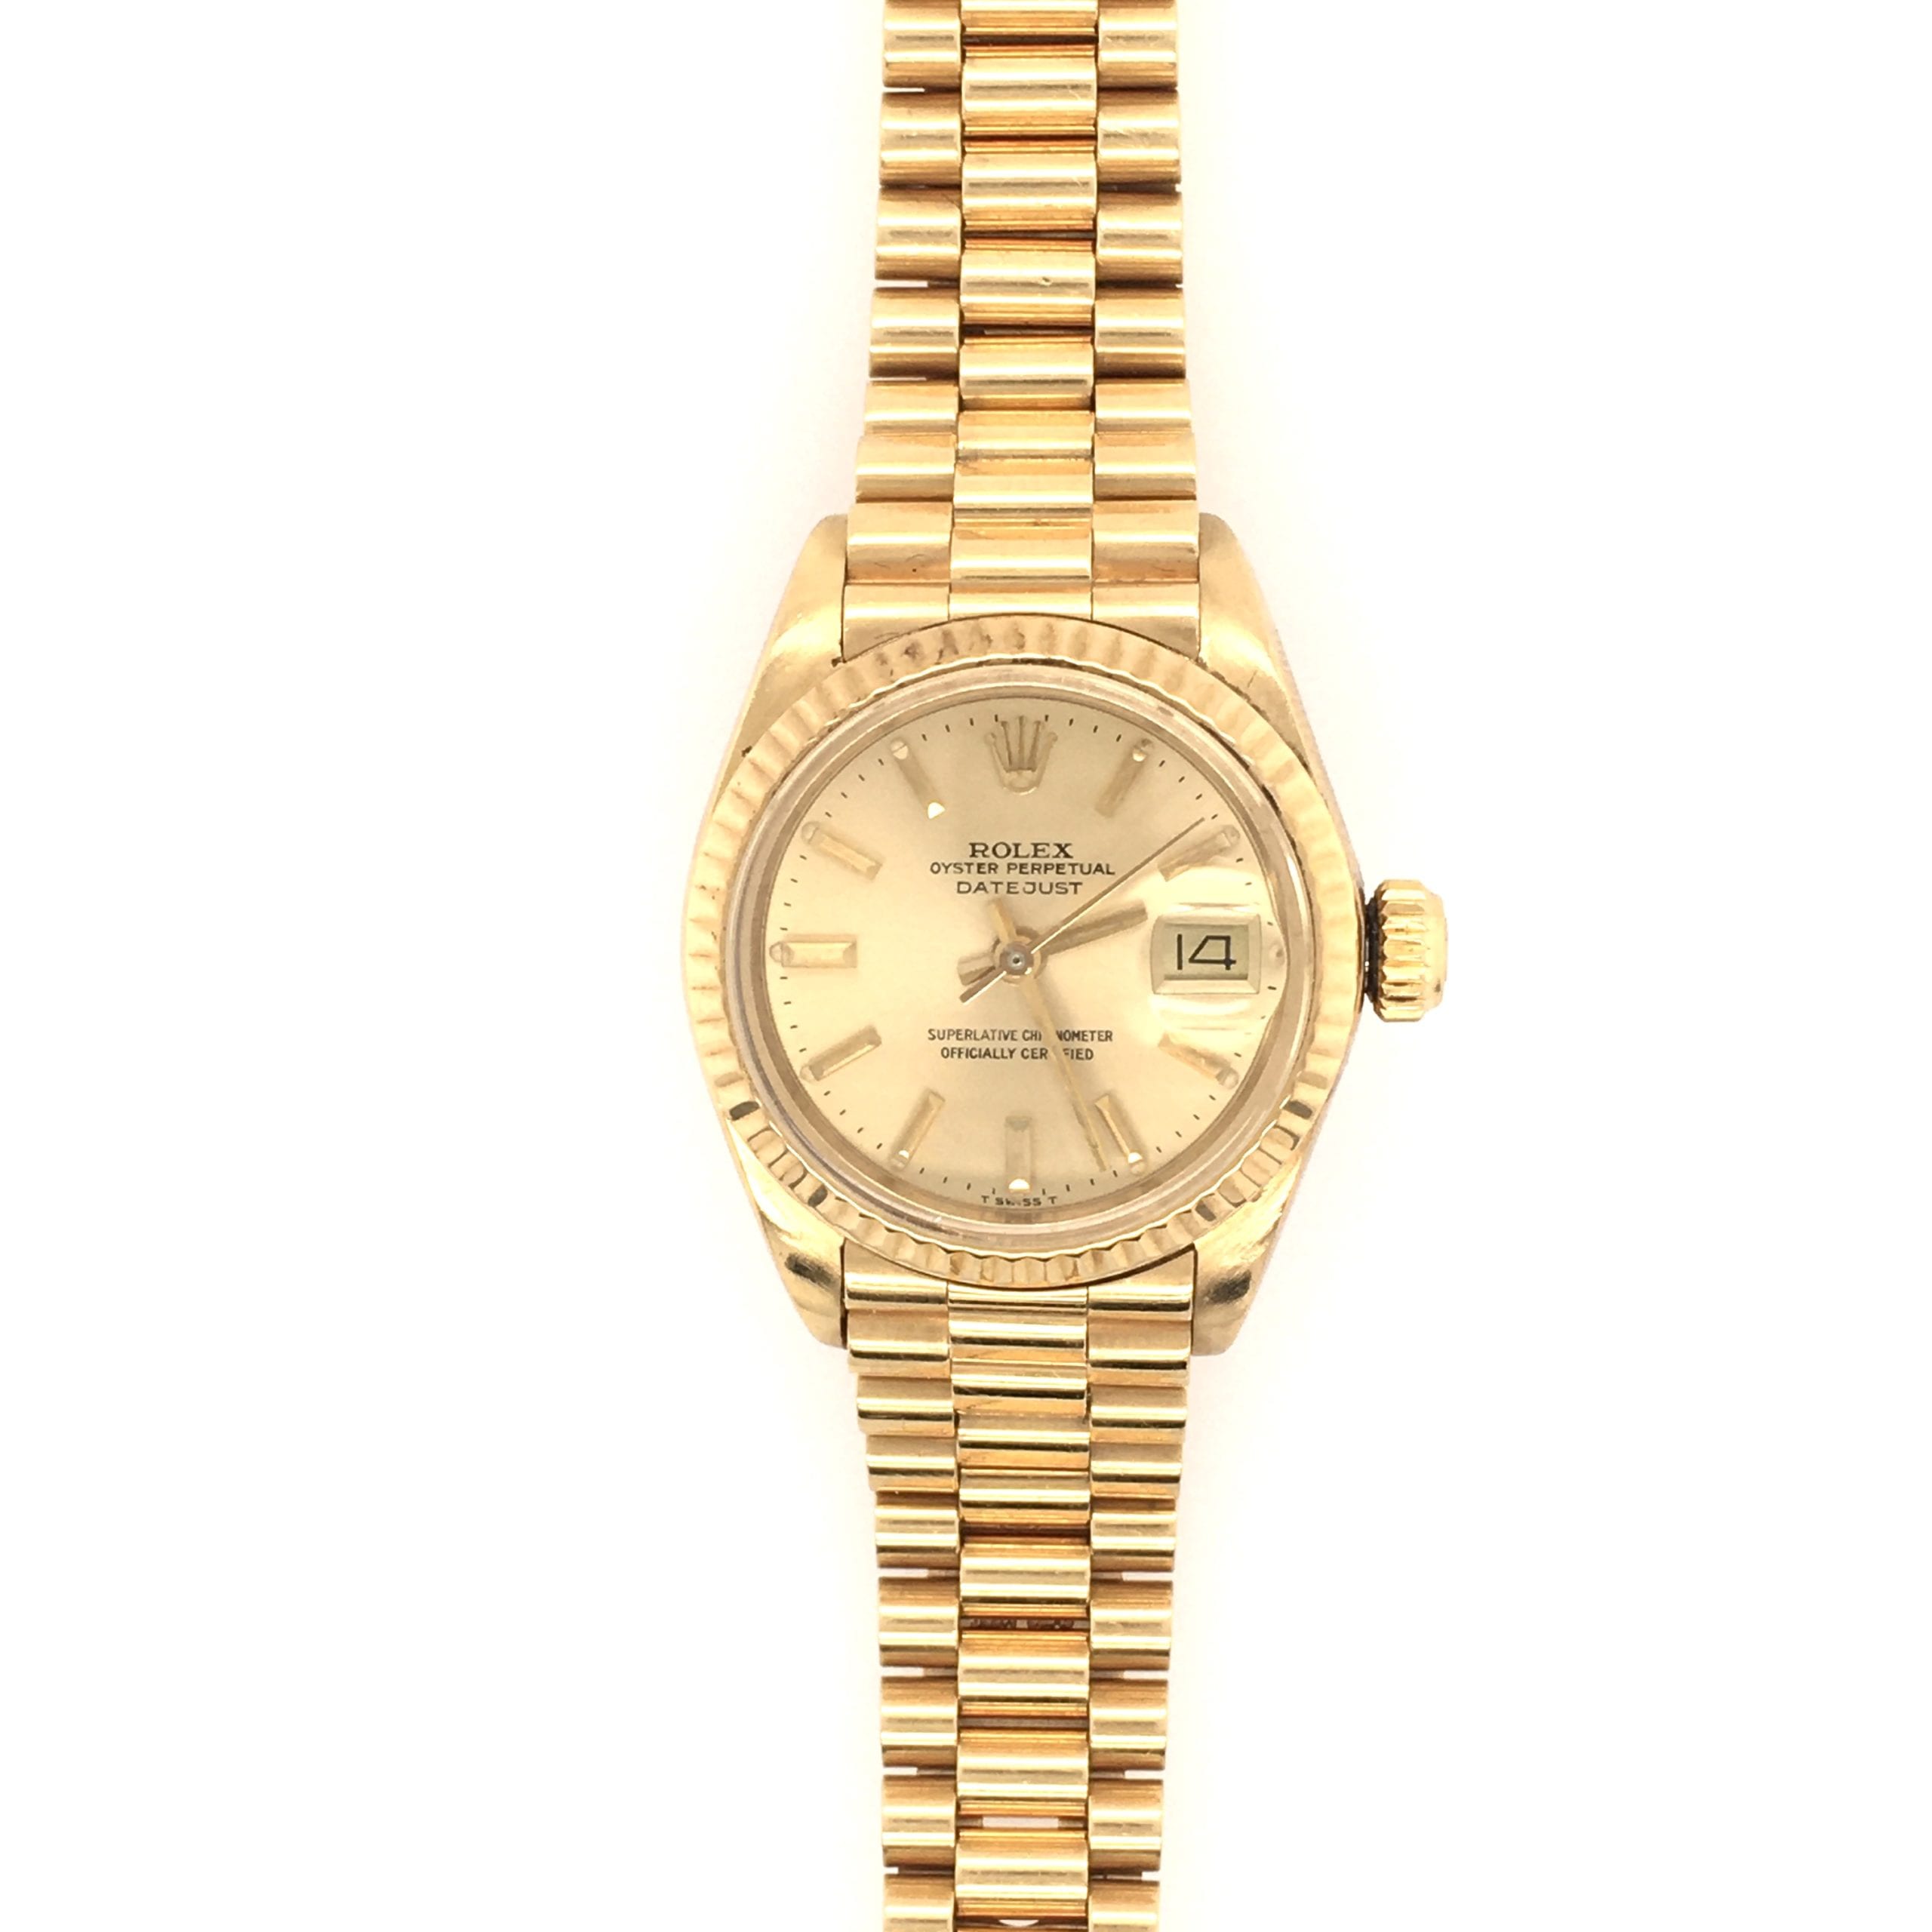 1980 rolex presidential watch